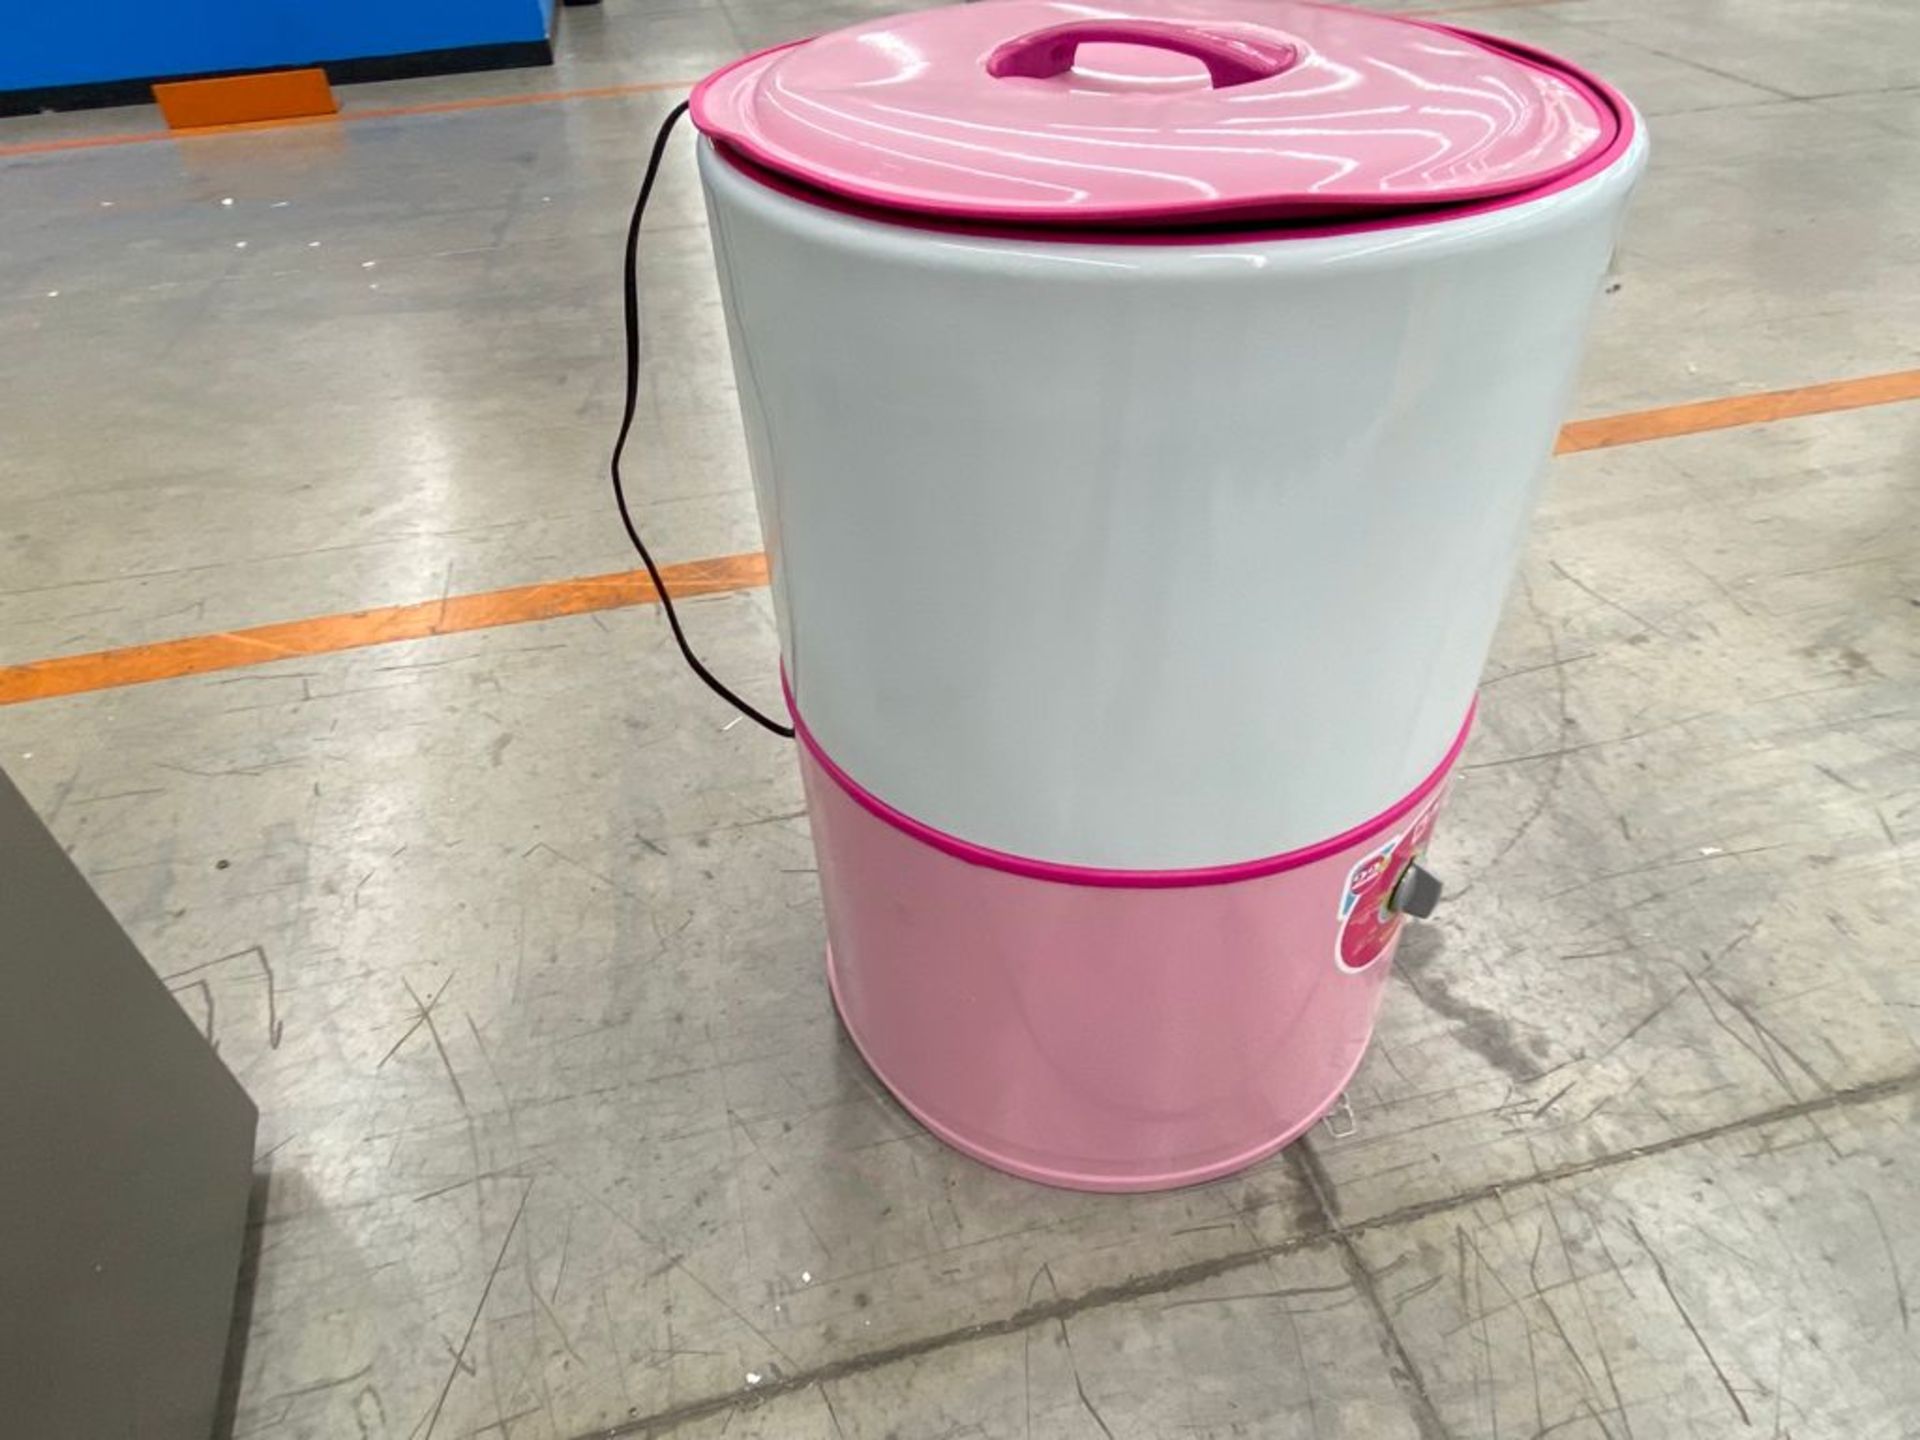 1 Lavadora marca Koblenz de 22 kilos color rosa modelo LRK-2211A - Image 4 of 17